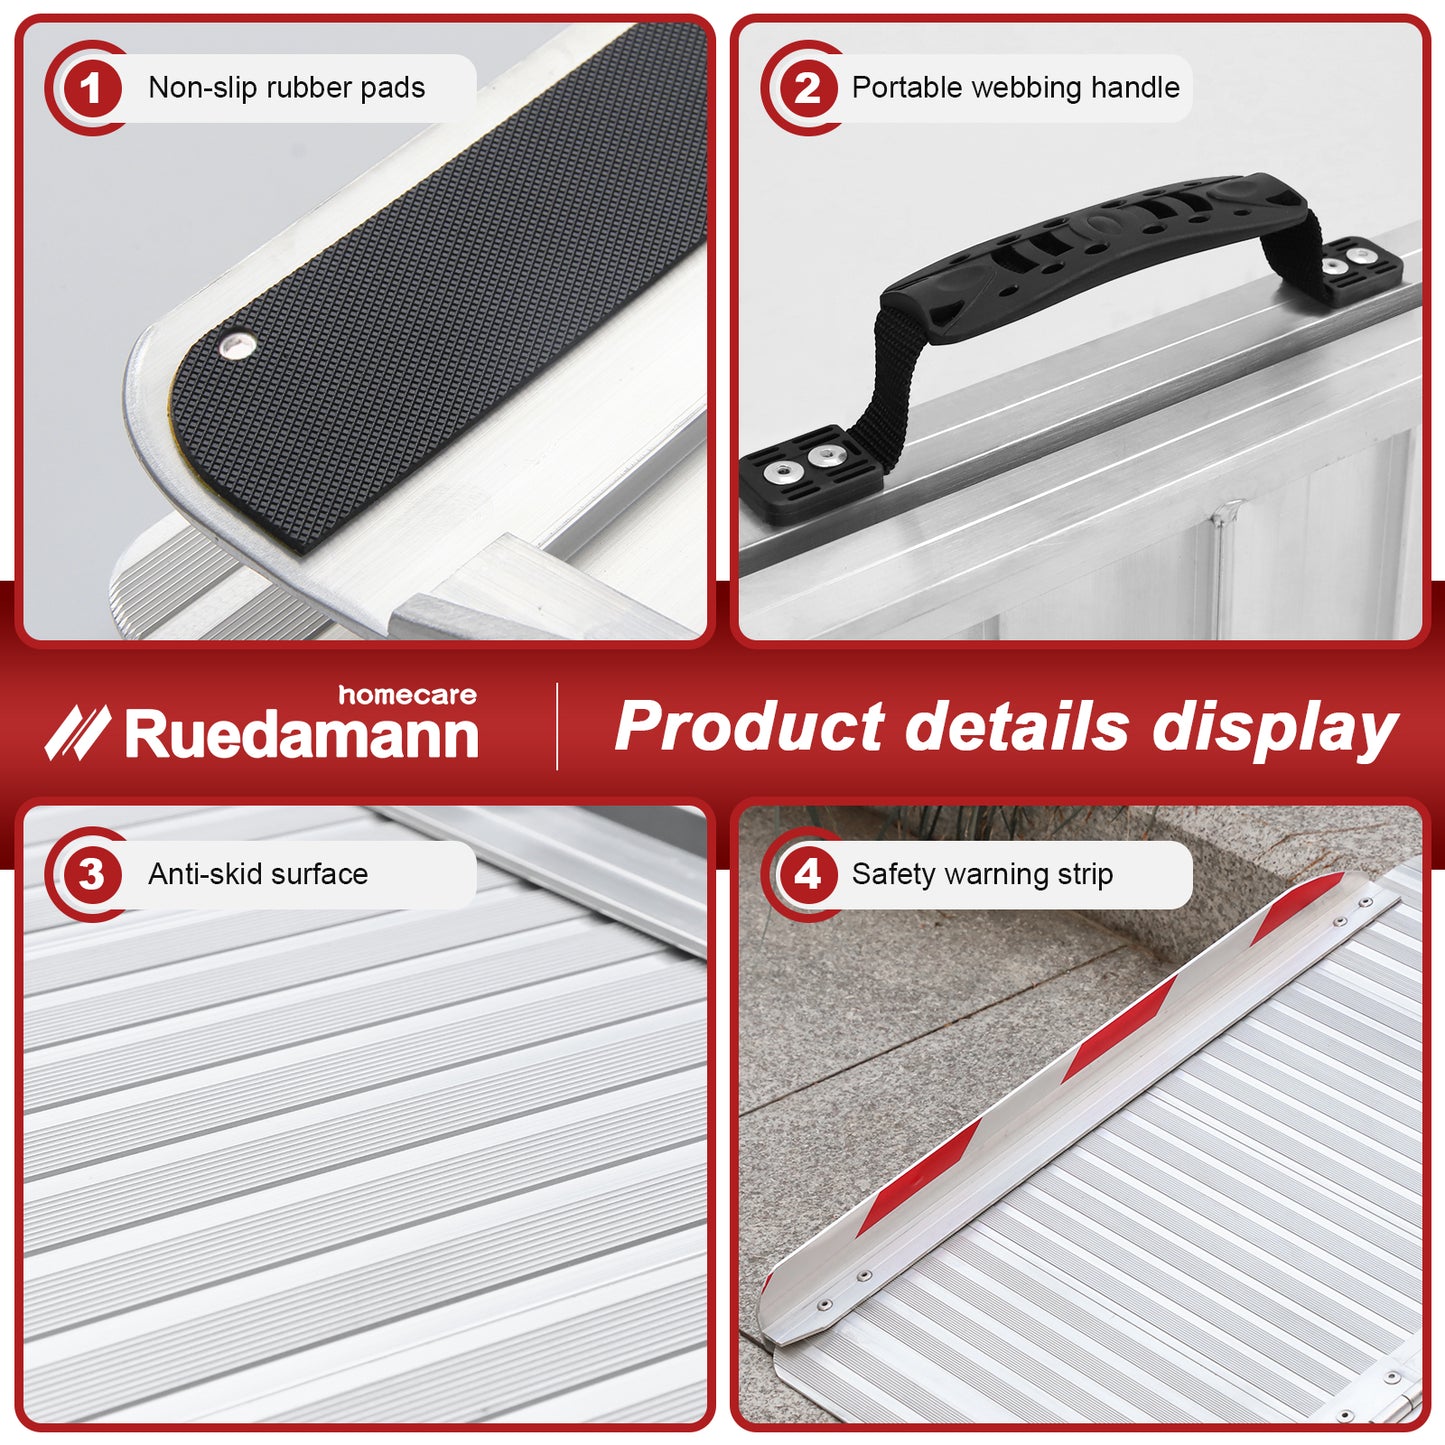 Ruedamann® Threshold Ramp Portable Aluminum Folding Ramps for Wheelchairs